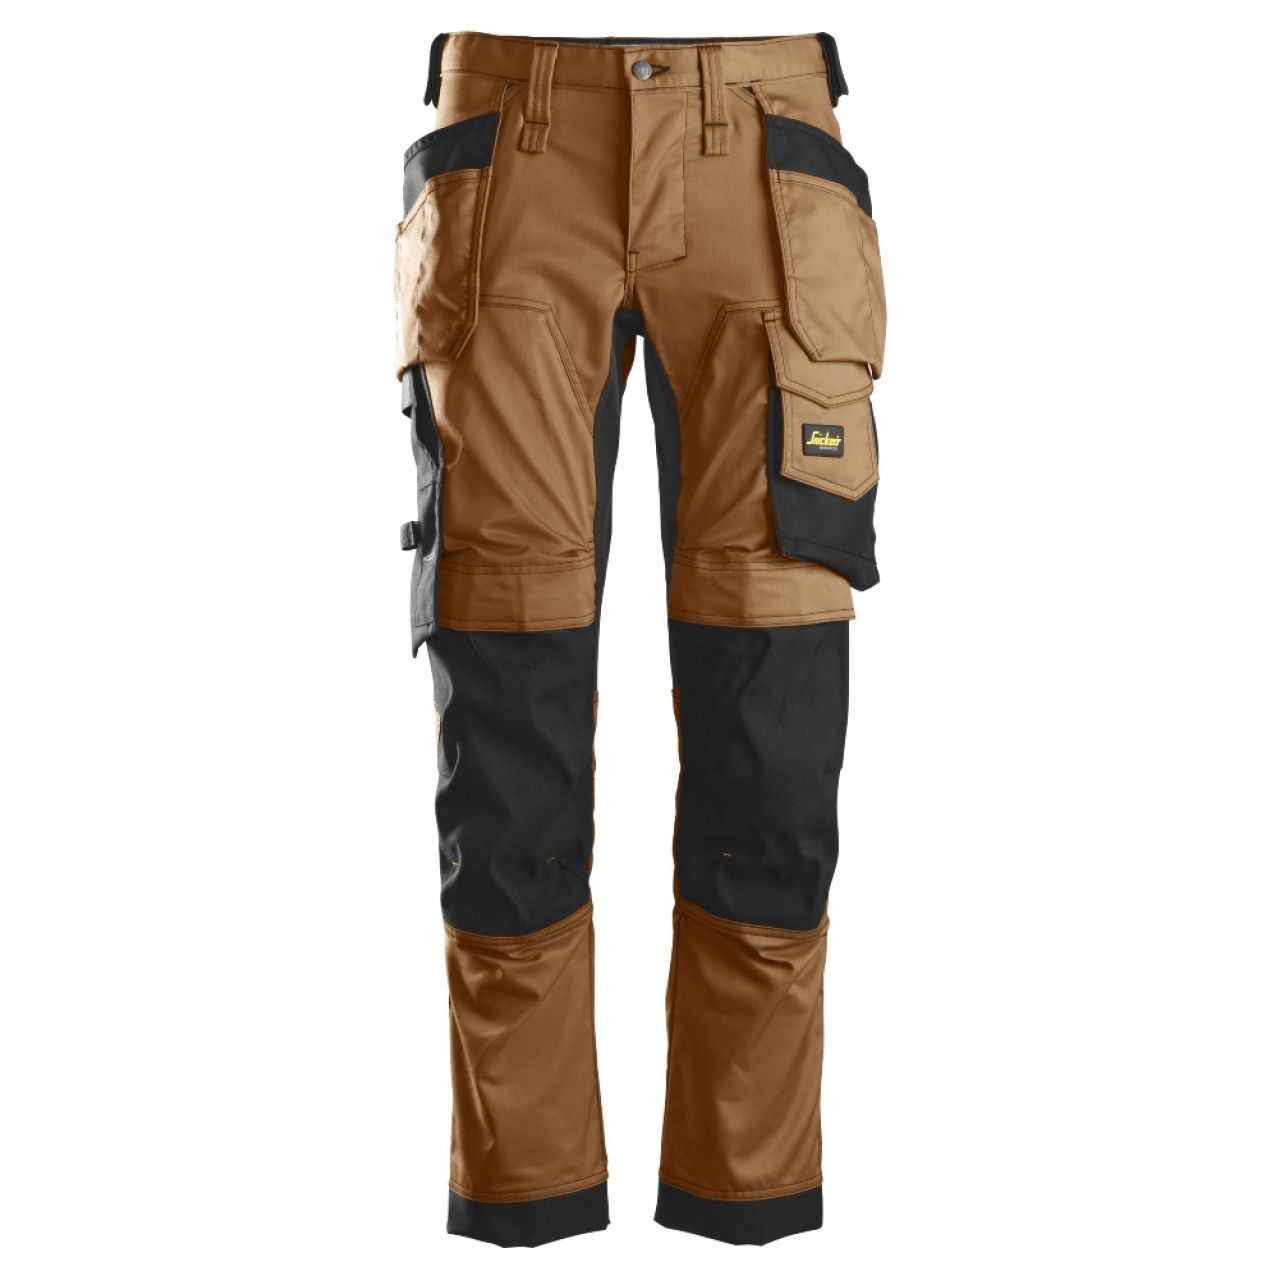 6241 Pantalones largos de trabajo elásticos con bolsillos flotantes AllroundWork marron-negro talla 256